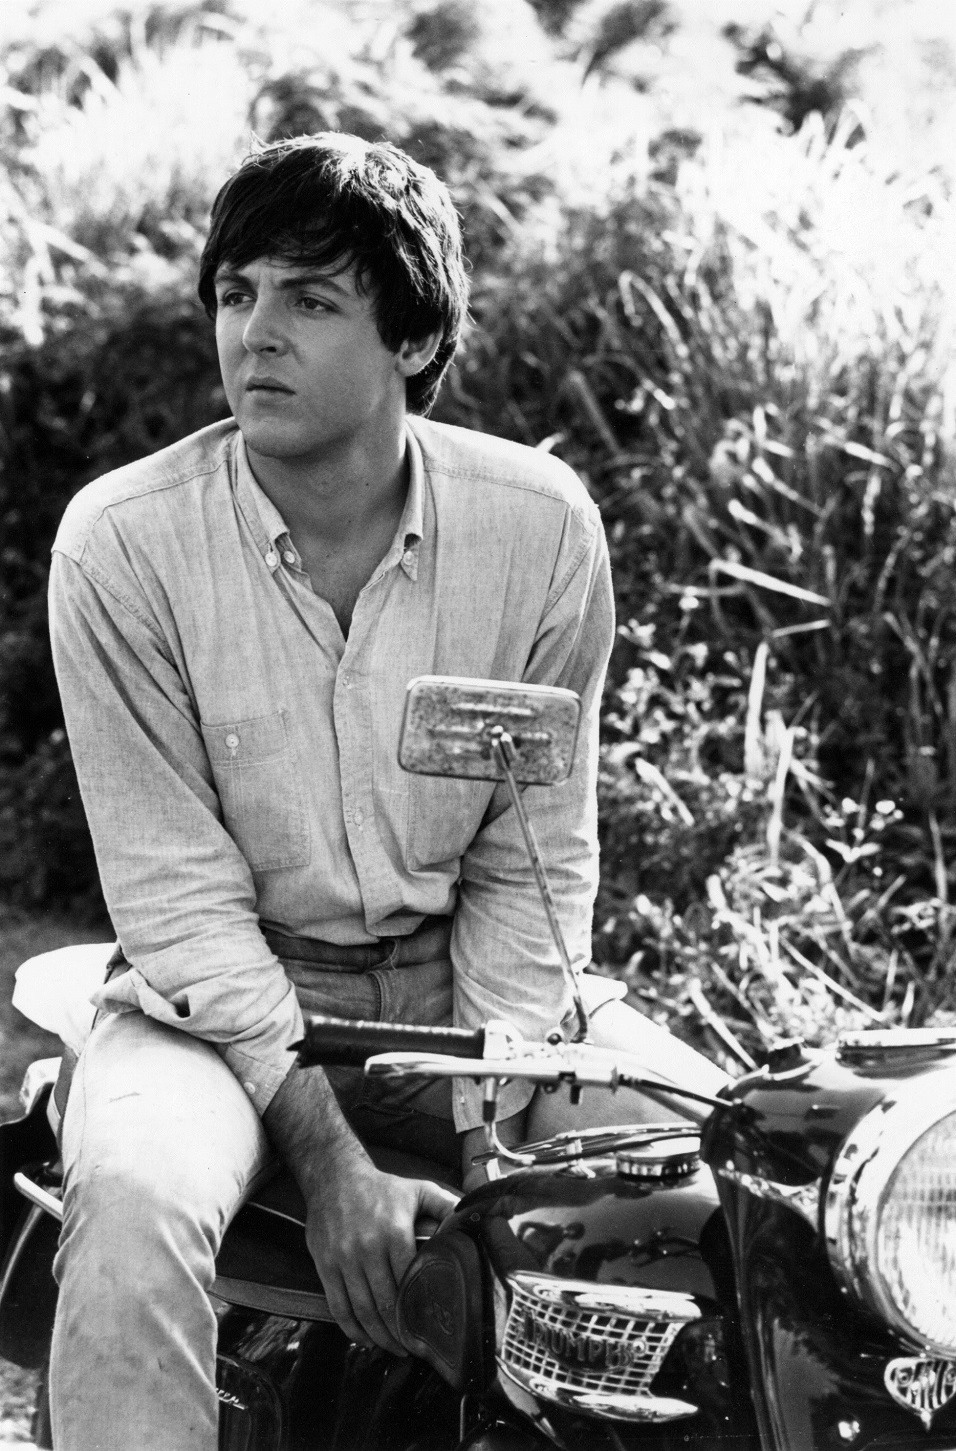 Paul McCartney of The Beatles sitting astride his motor bike, 1965.